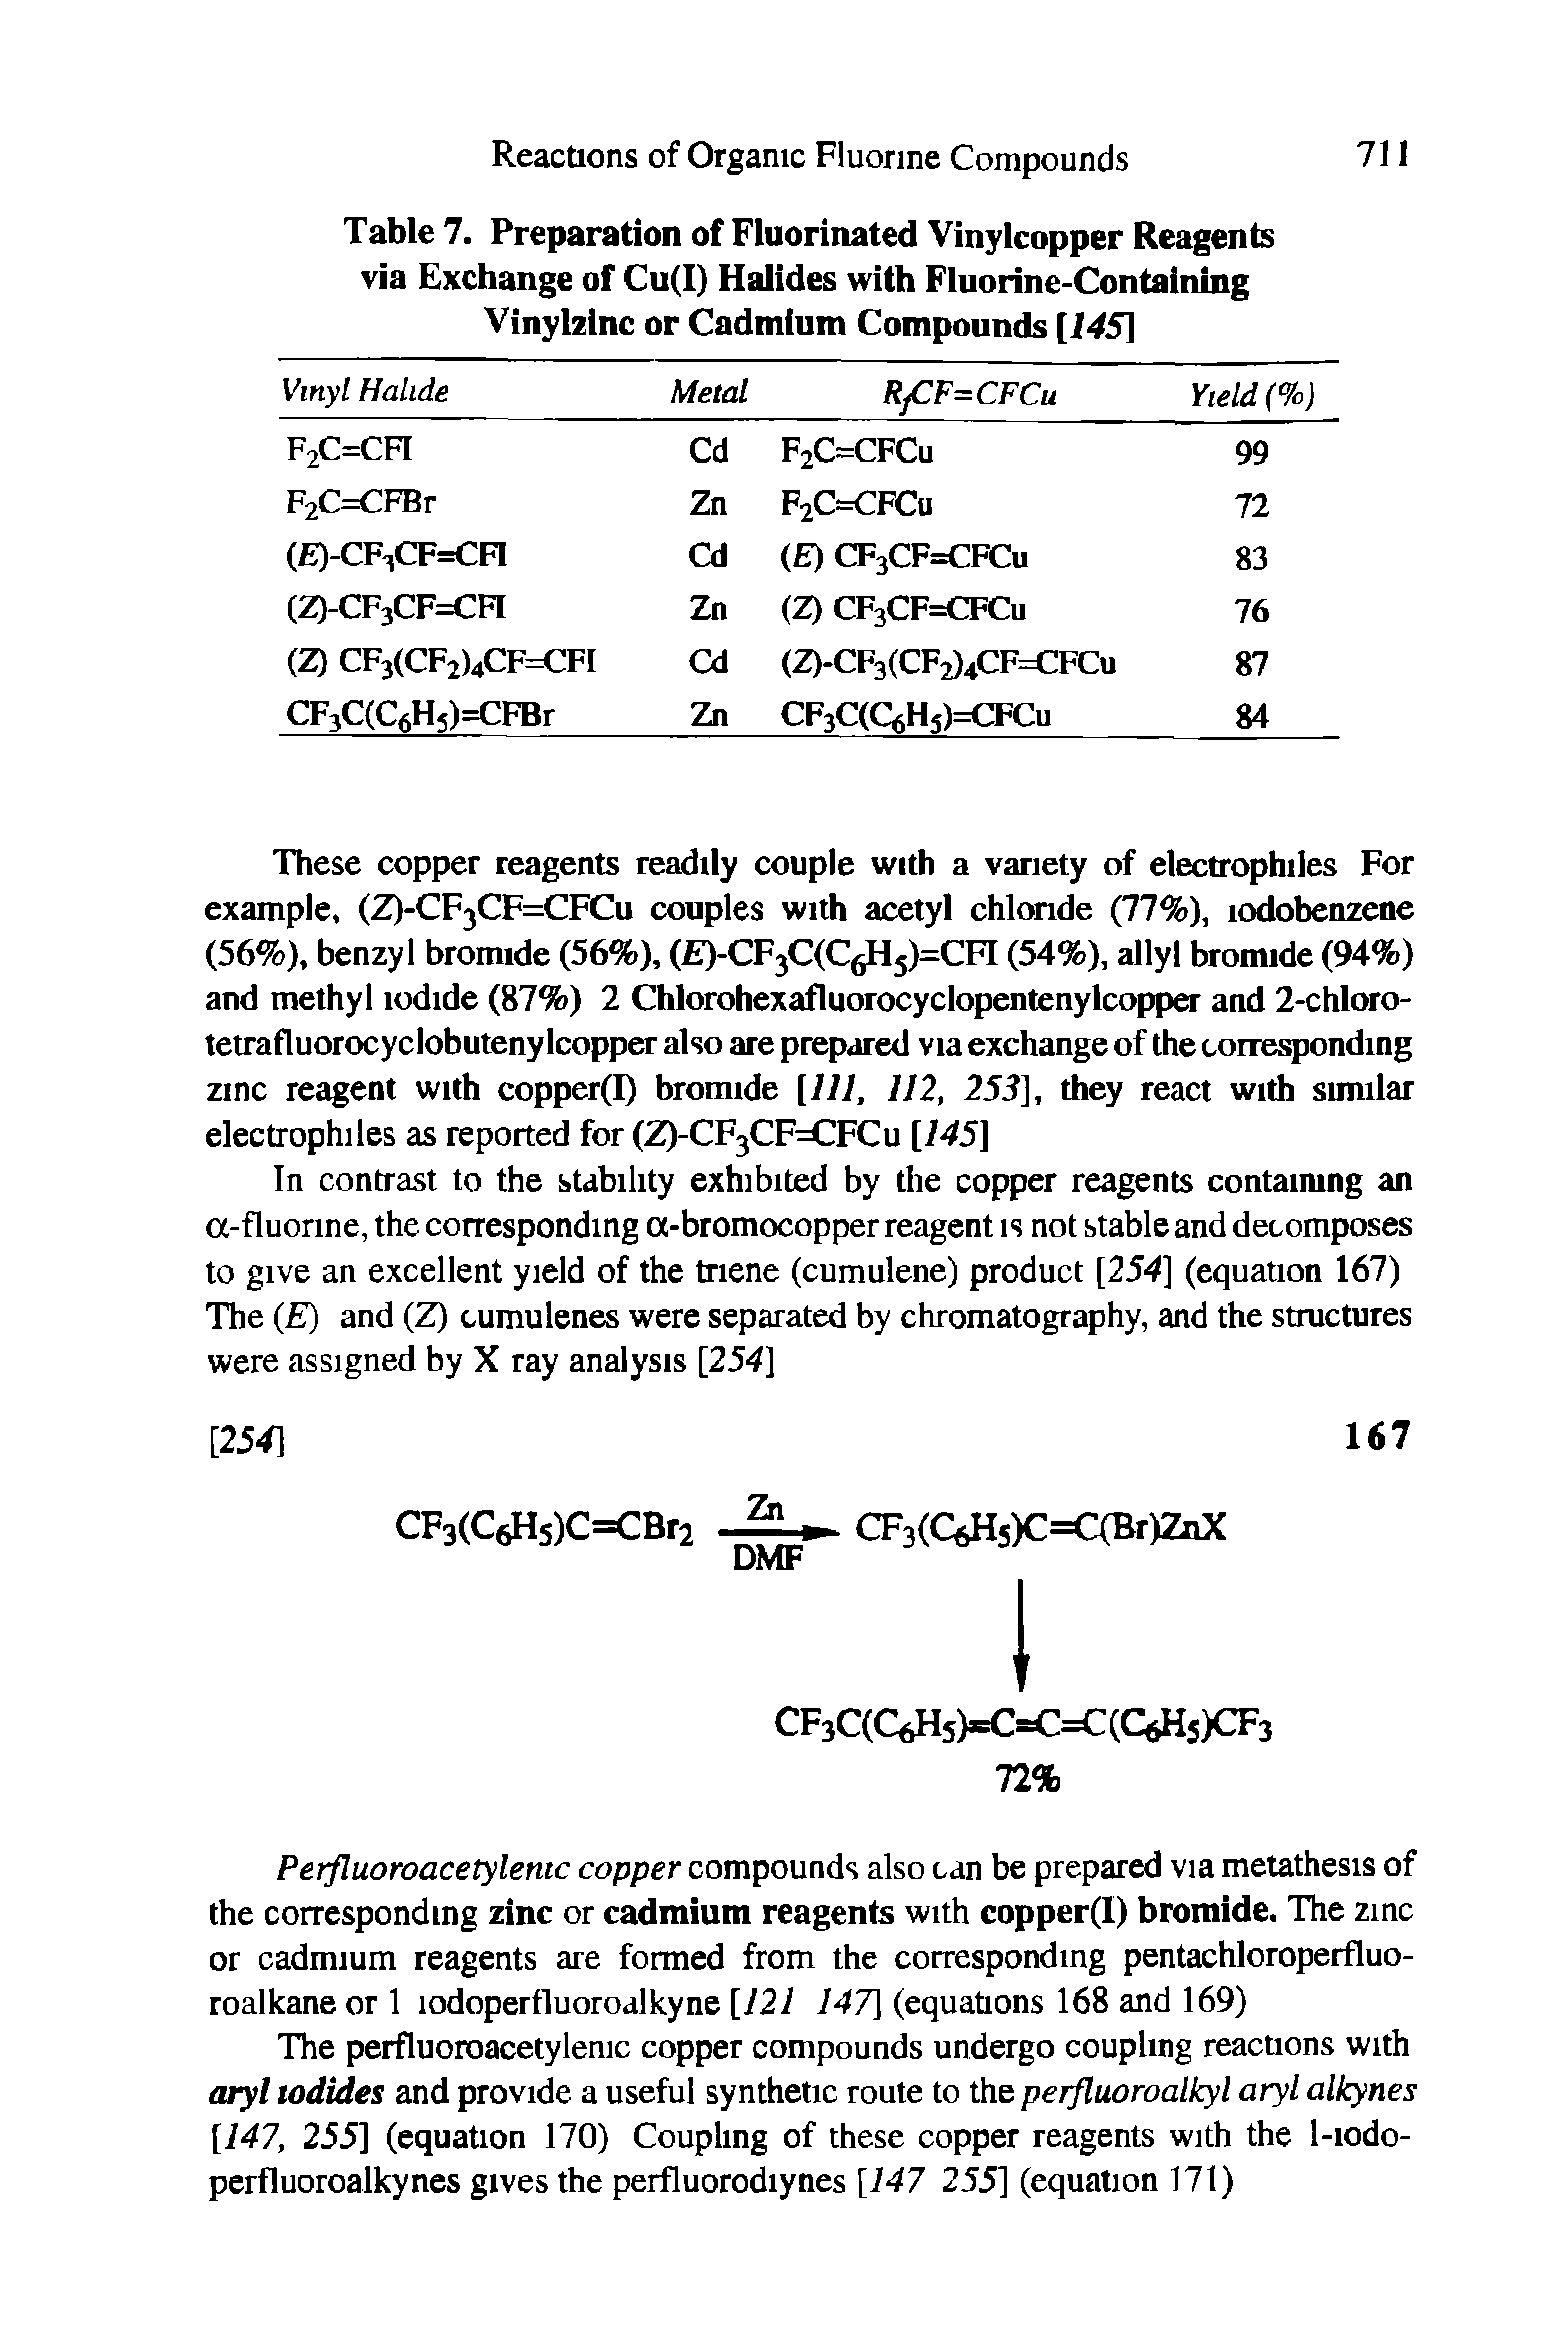 Table 7. Preparation of Fluorinated Vinylcopper Reagents via Exchange of Cu(I) Halides with Fluorine-Containing Vinylzinc or Cadmium Compounds [145]...